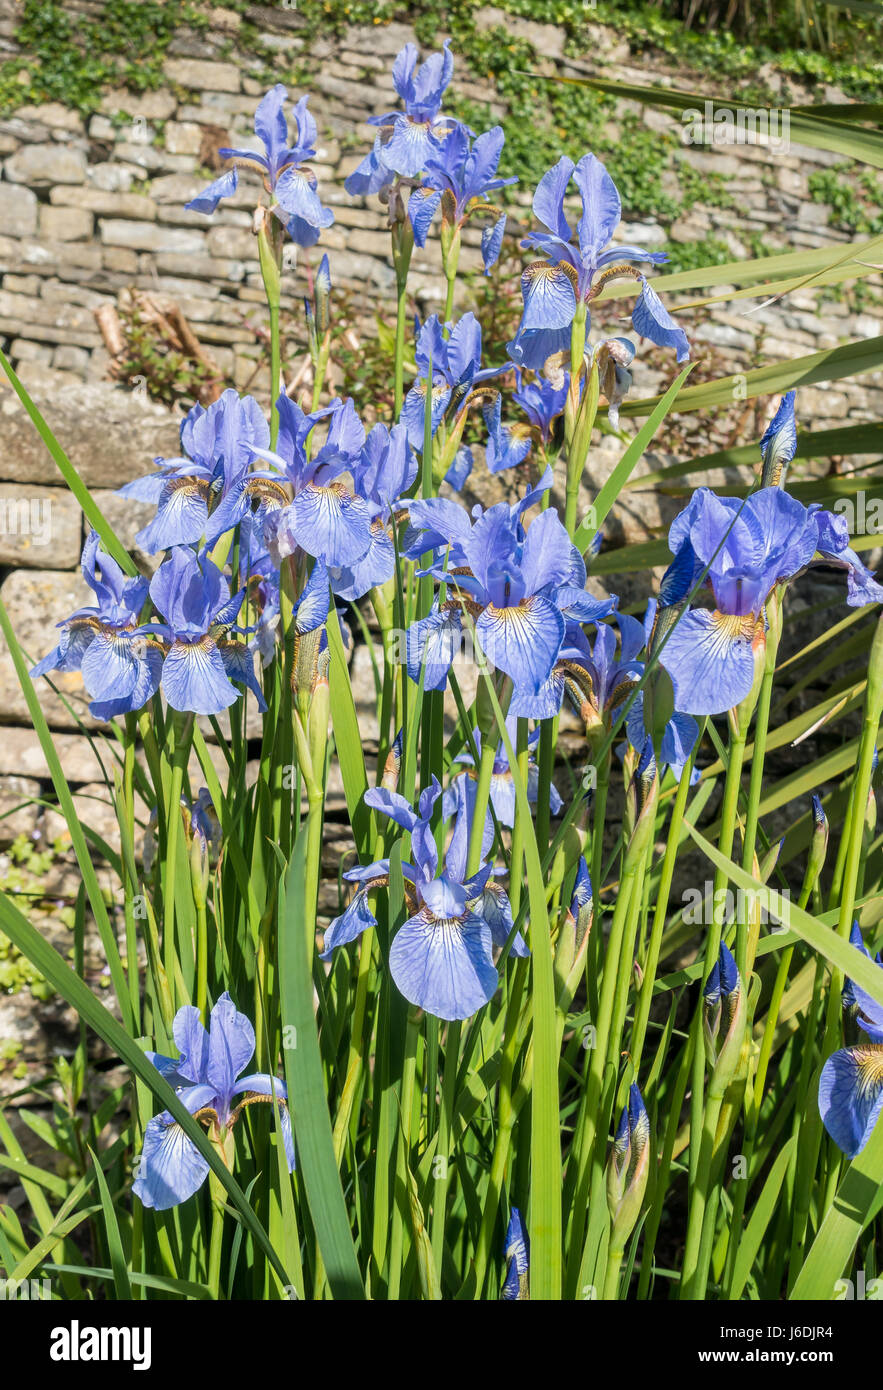 Beautiful blue iris, iris spuria, flowers growing in a garden. Stock Photo